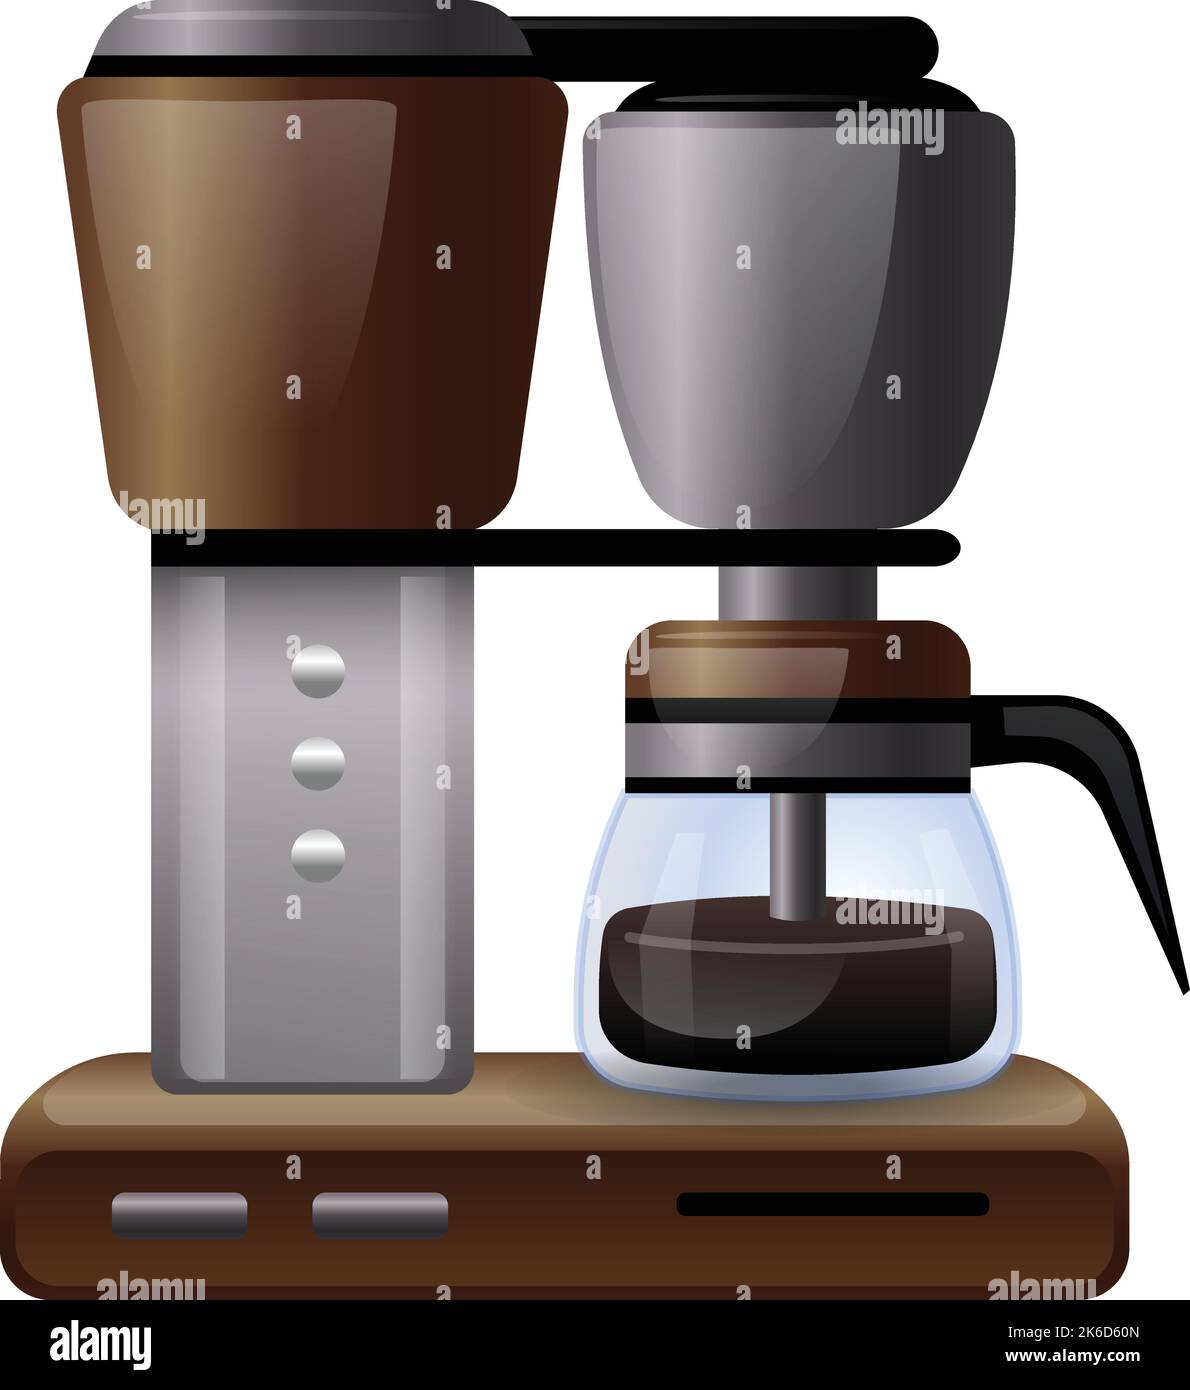 https://c8.alamy.com/compes/2k6d60n/vector-de-dibujos-animados-icono-de-la-maquina-de-cafe-de-oficina-cafetera-espresso-beba-la-capsula-2k6d60n.jpg